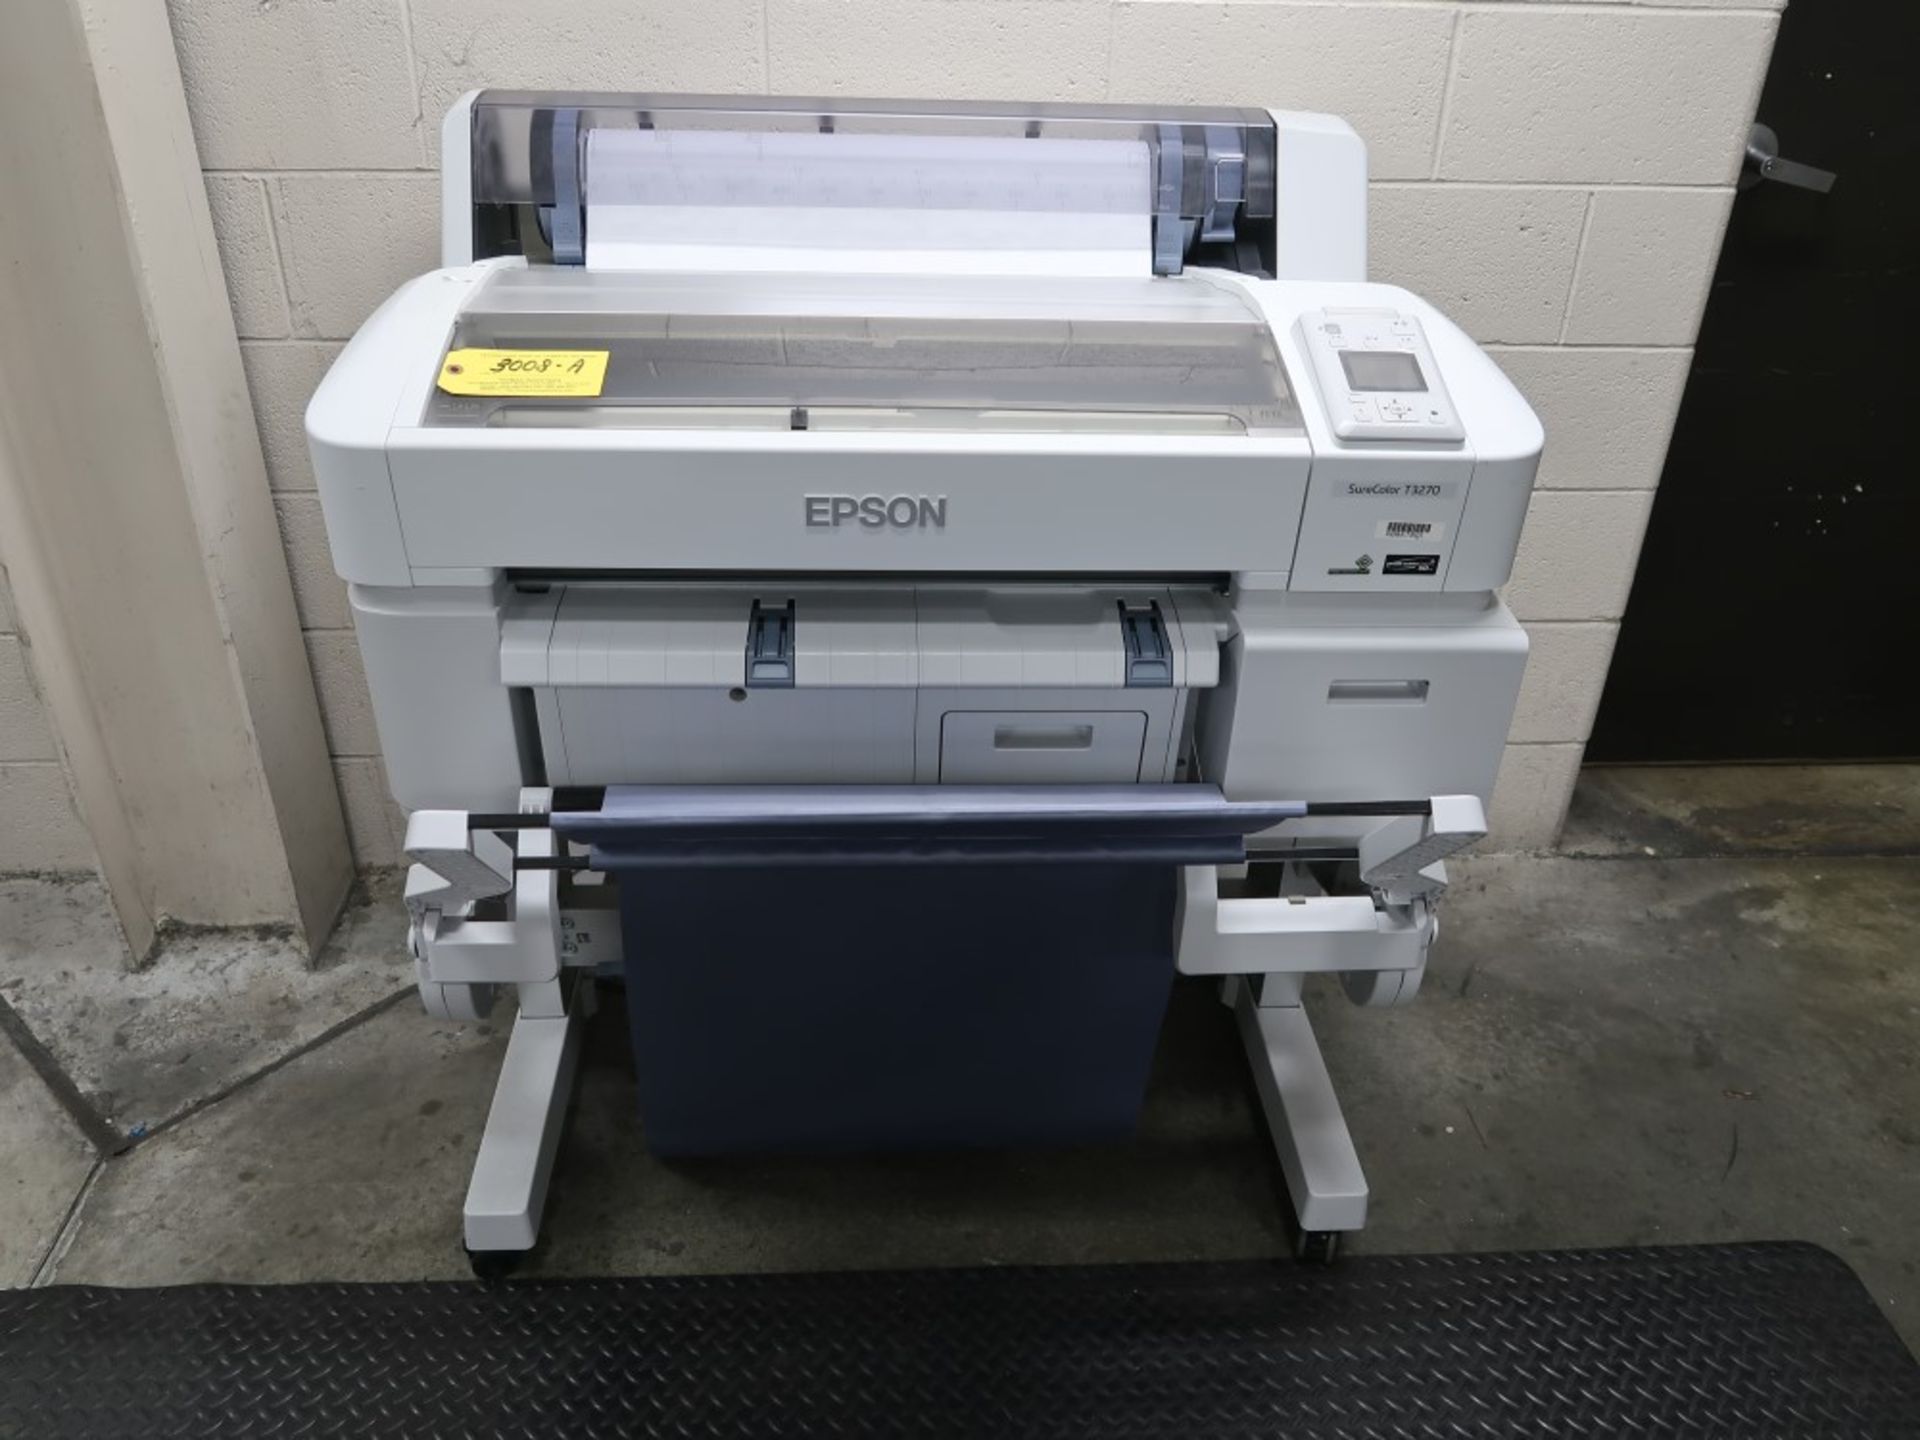 2017 Epson SureColor T3270 Wide Format Printer Model K251A - Image 3 of 3